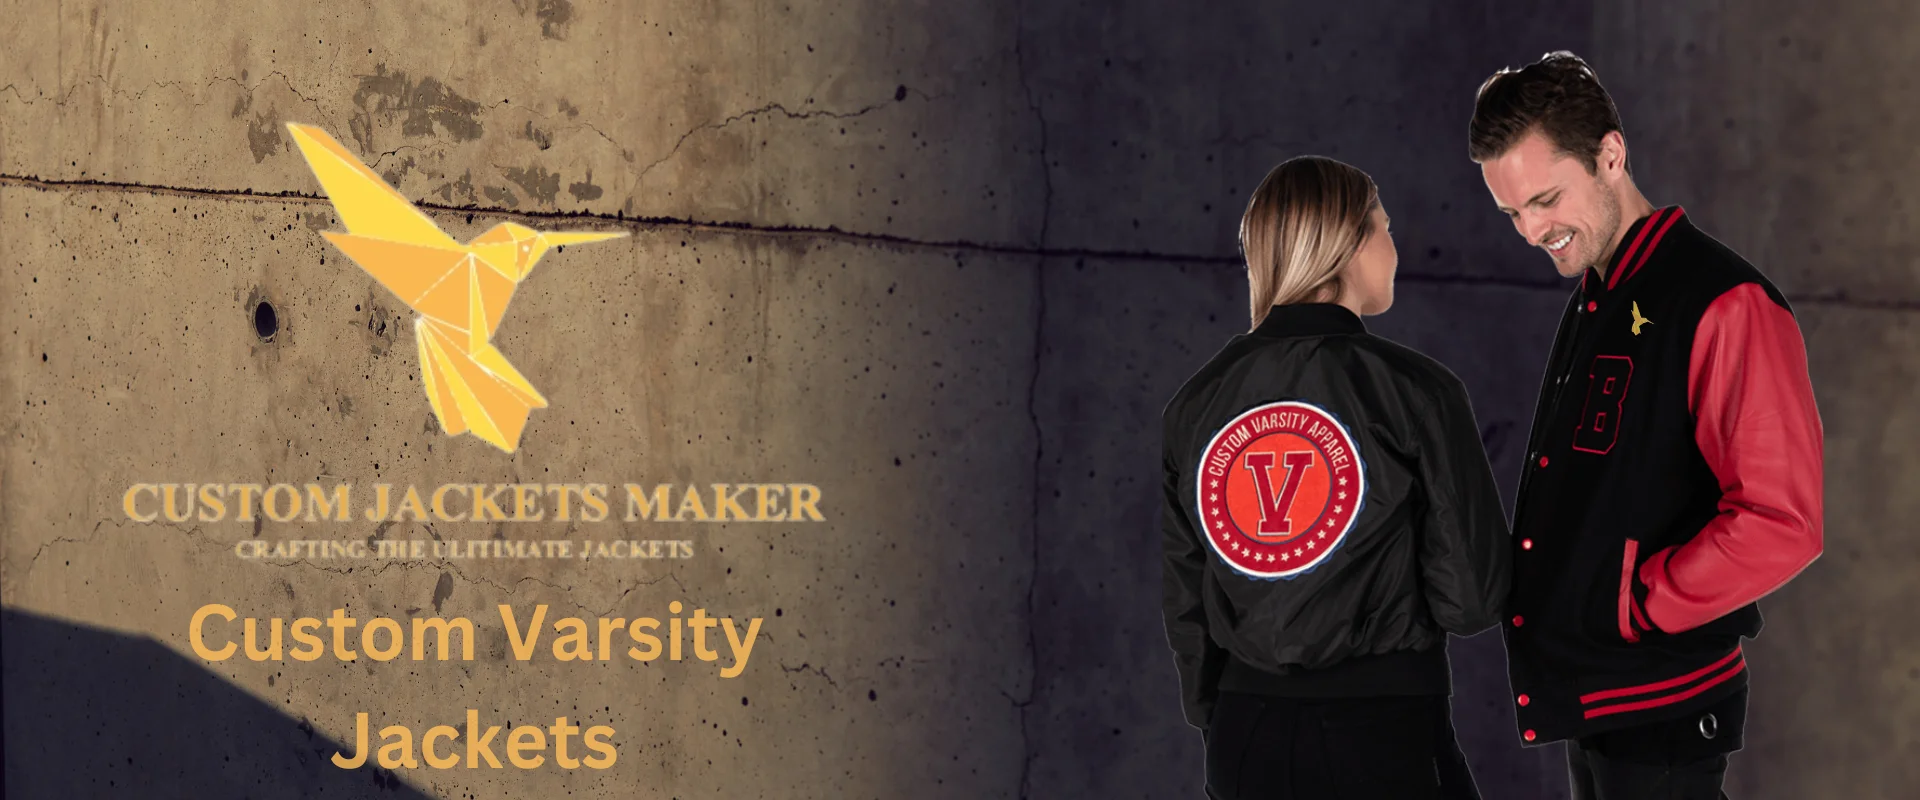 Banner Image of Custom Varsity Jacket